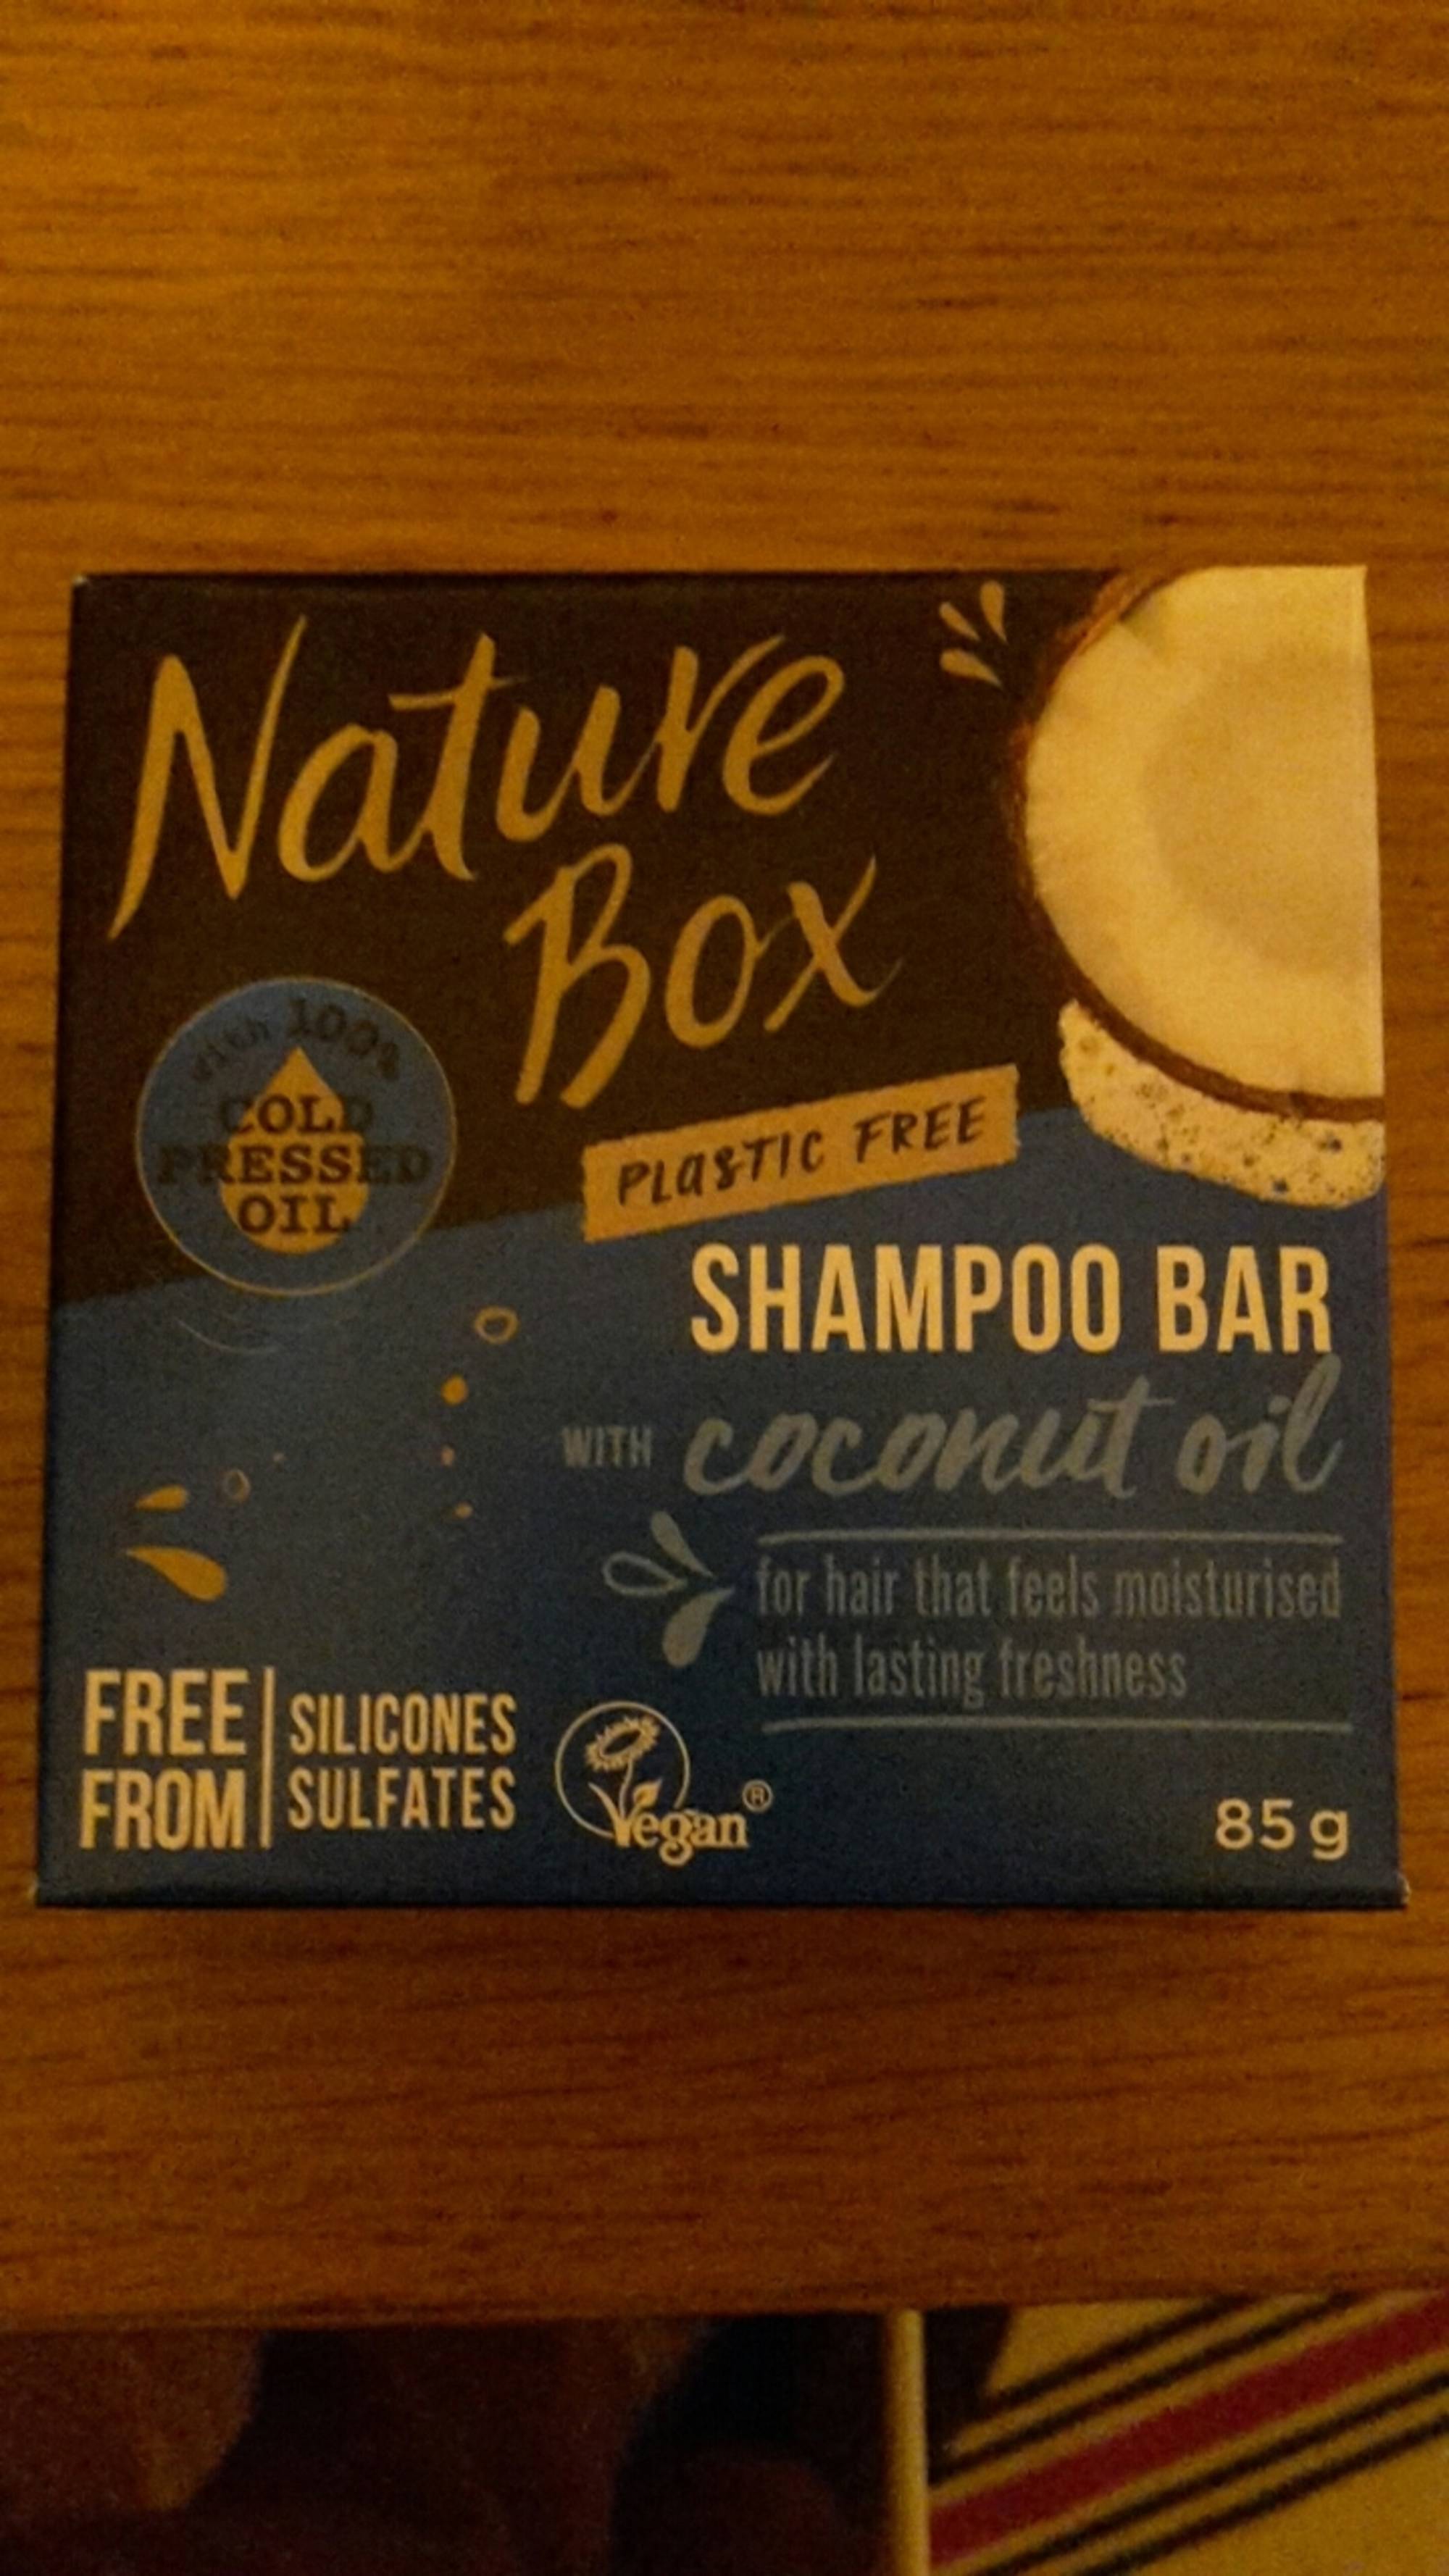 NATURE BOX - Shampoo bar with coconut oil